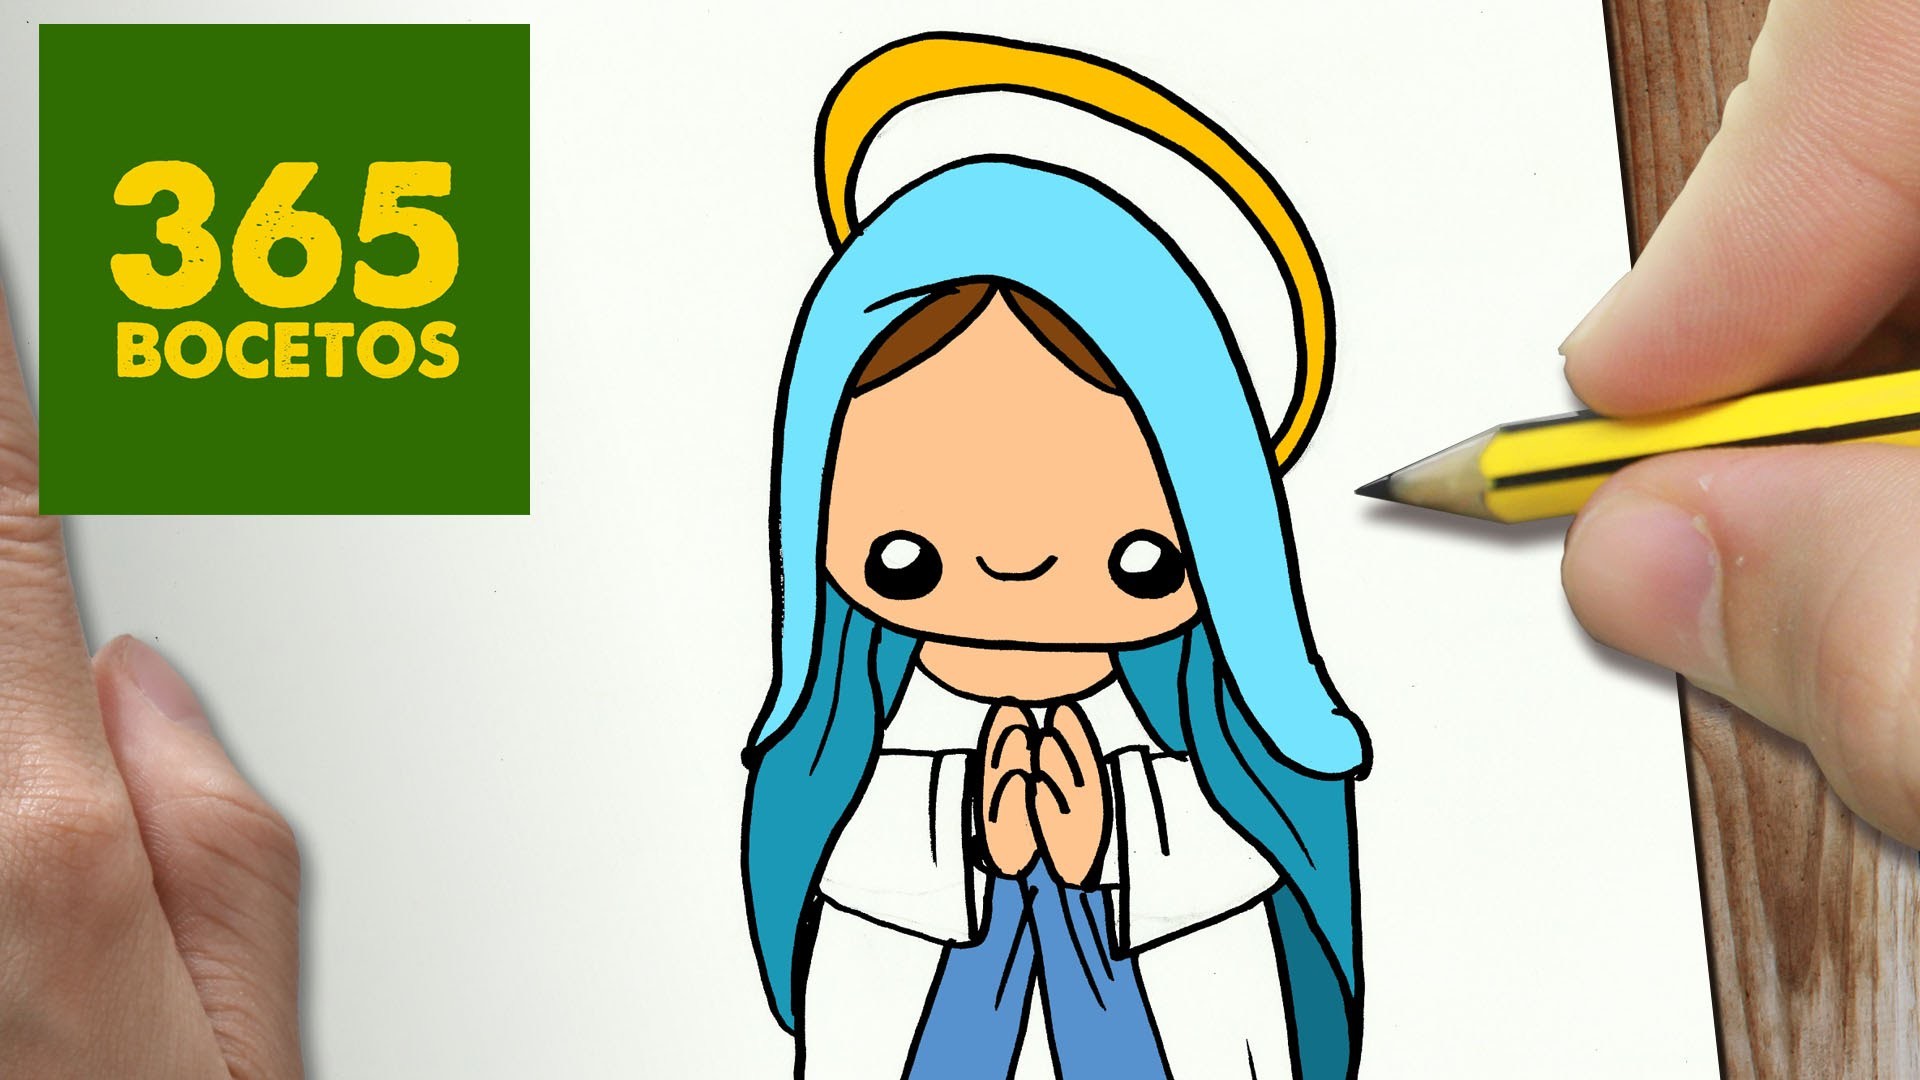 COMO DIBUJAR VIRGEN MARIA PARA NAVIDAD PASO A PASO: Dibujos kawaii navideños - draw Virgin Mary